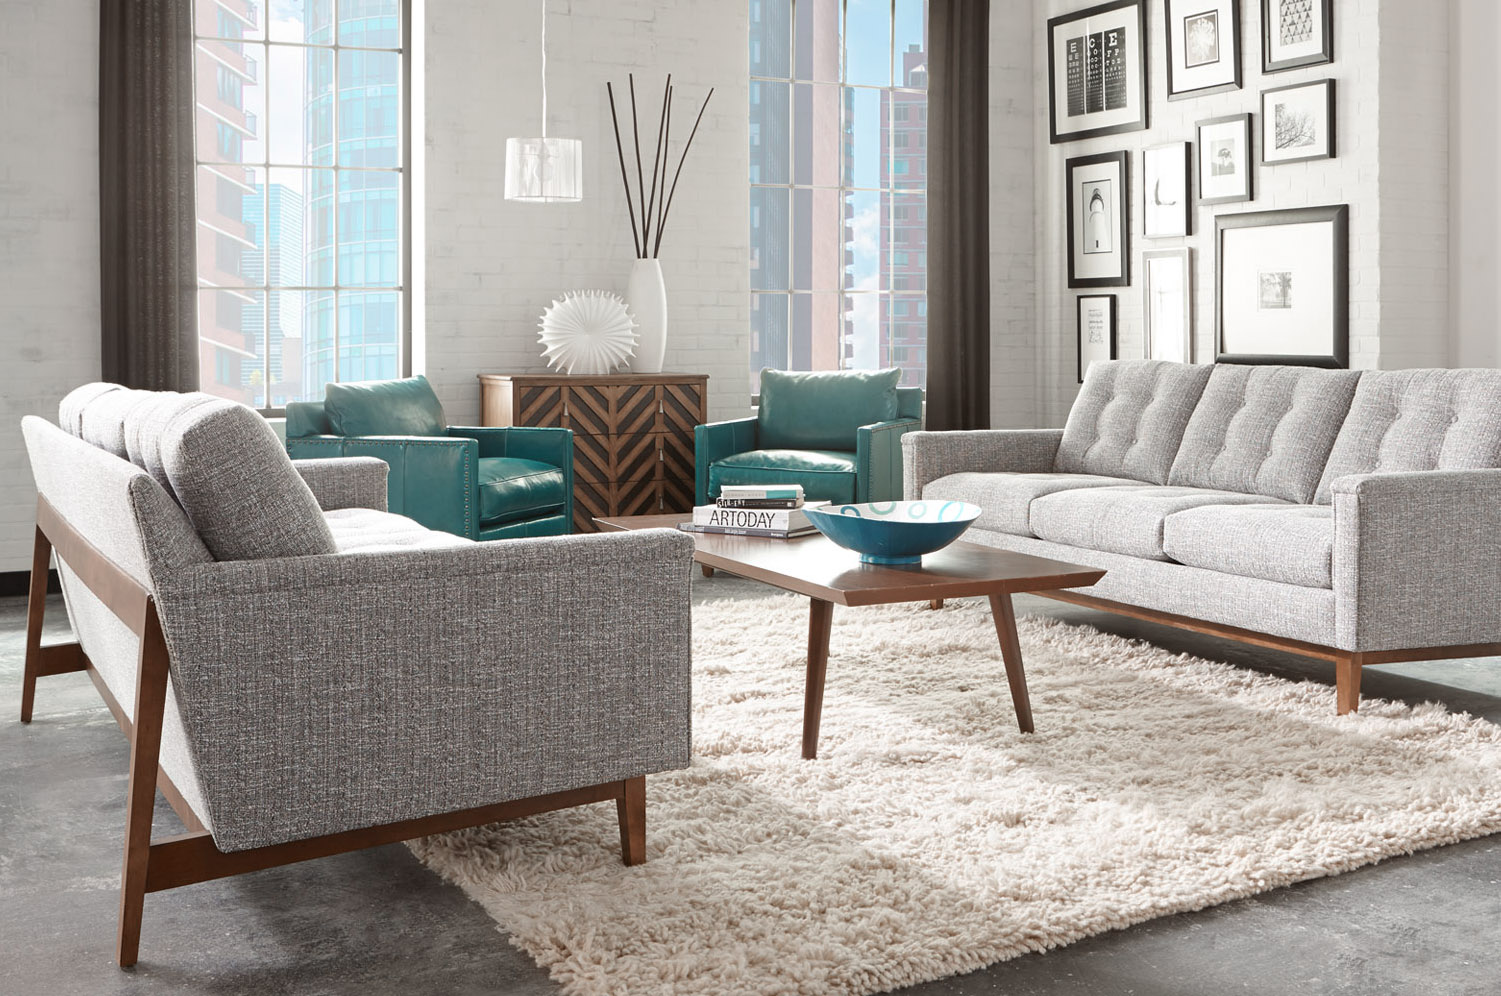 Shop Homethreads for Rowe Furniture